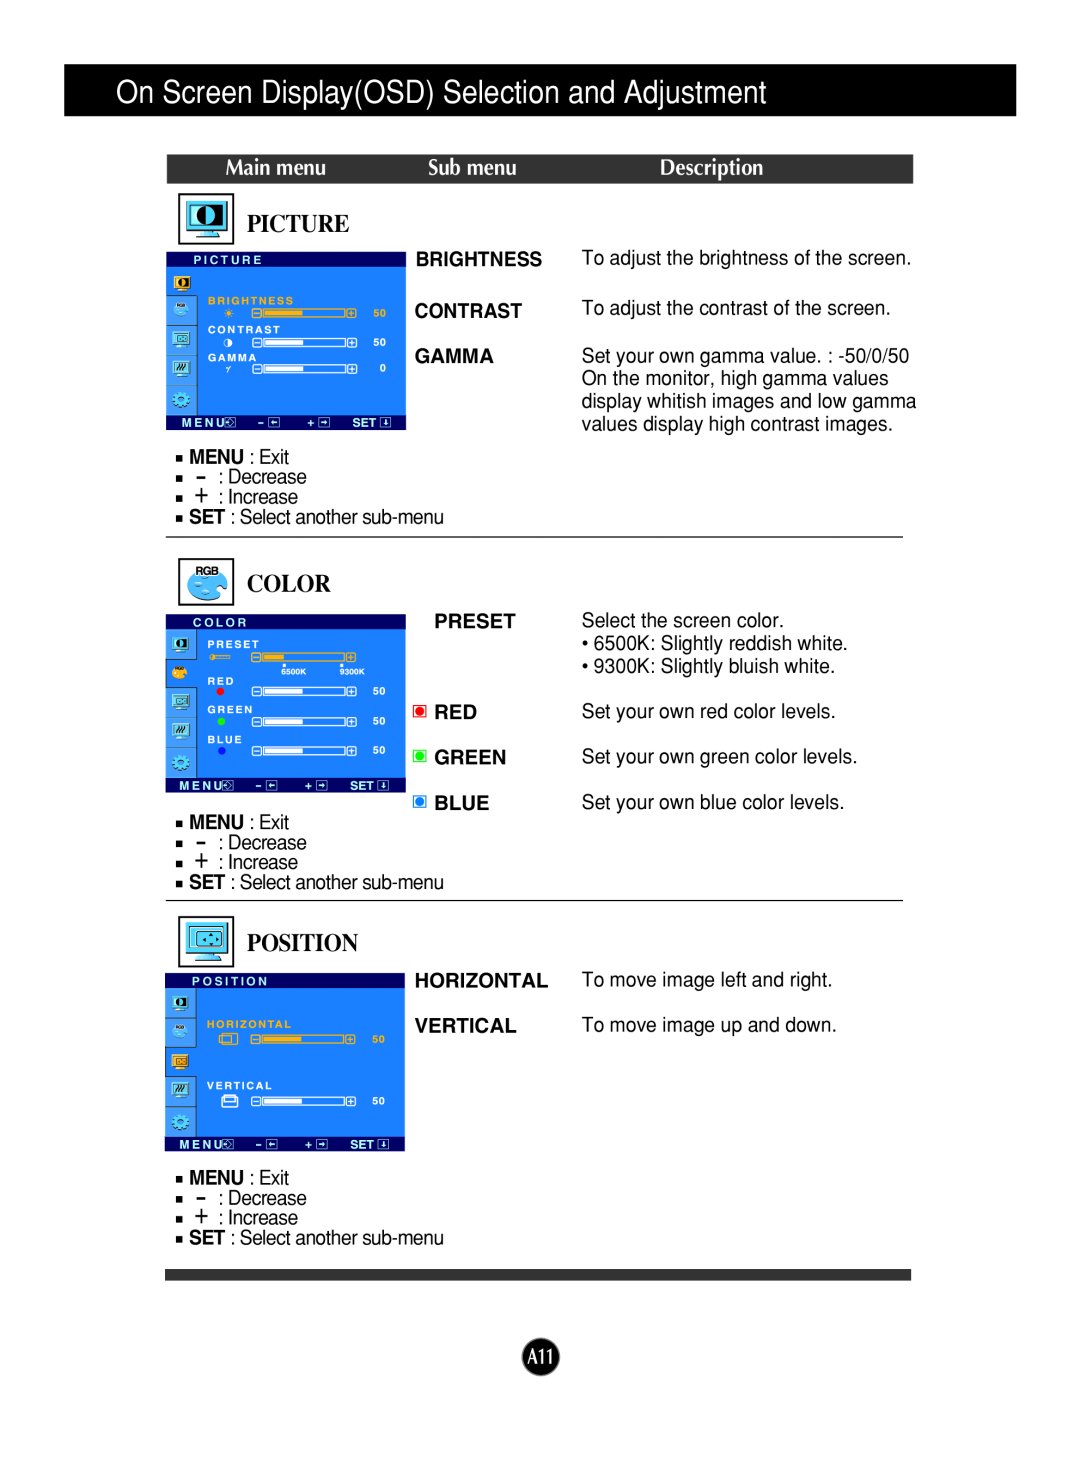 LG Electronics L1717S manual Picture, Color, Position, Main menu, Sub menu, Description, CONTRAST GAMMA MENU Exit 